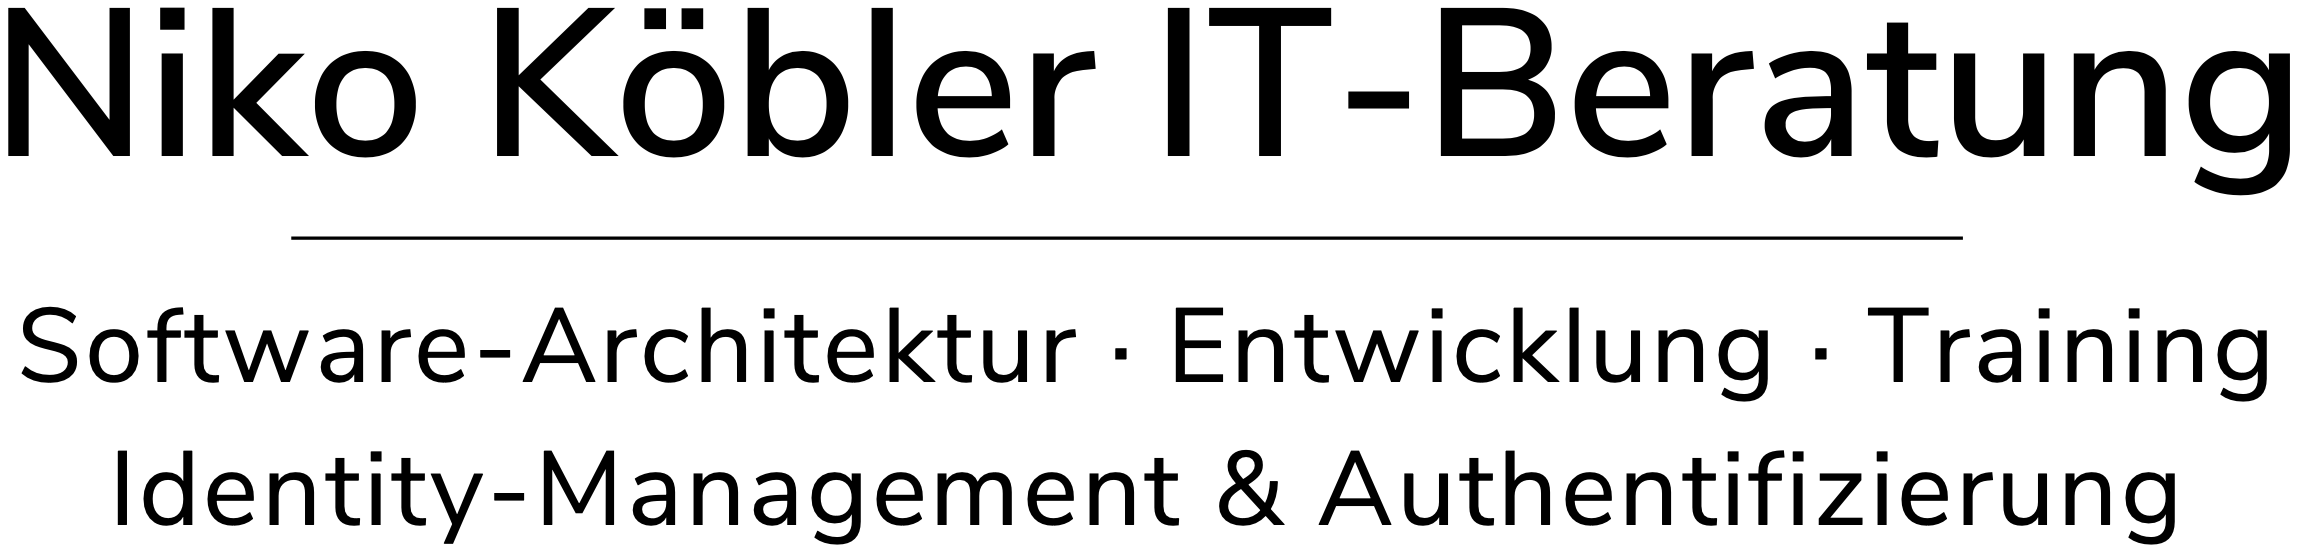 Niko Köbler IT-Beratung, Software-Architektur, Entwicklung, Training, Identity-Management & Authentifizierung, Keycloak, IAM, SSO, OpenID Connect, OIDC